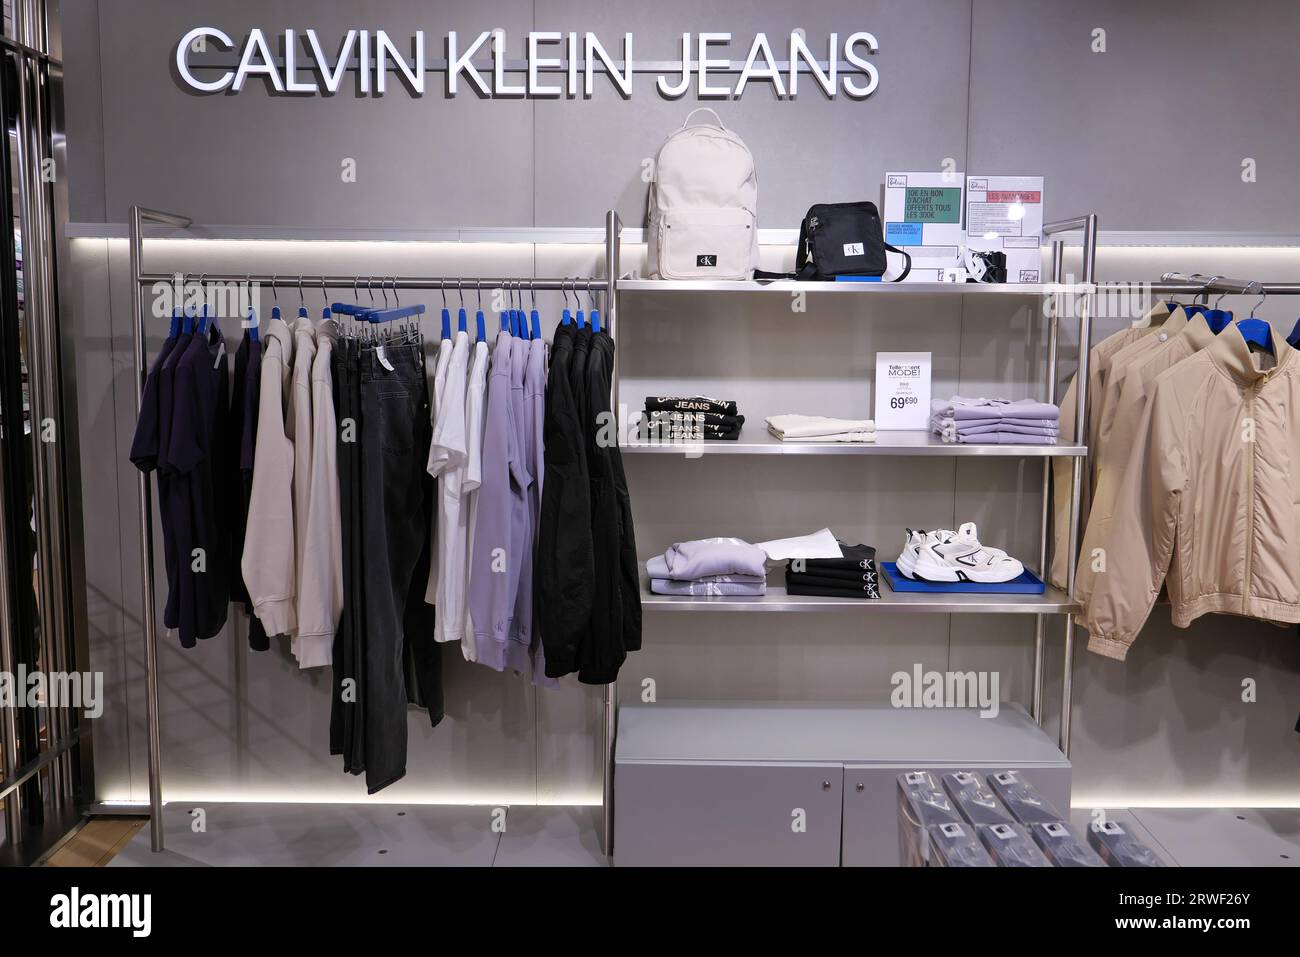 https://c8.alamy.com/comp/2RWF26Y/calvin-klein-jeans-clothing-on-display-inside-the-fashion-store-2RWF26Y.jpg